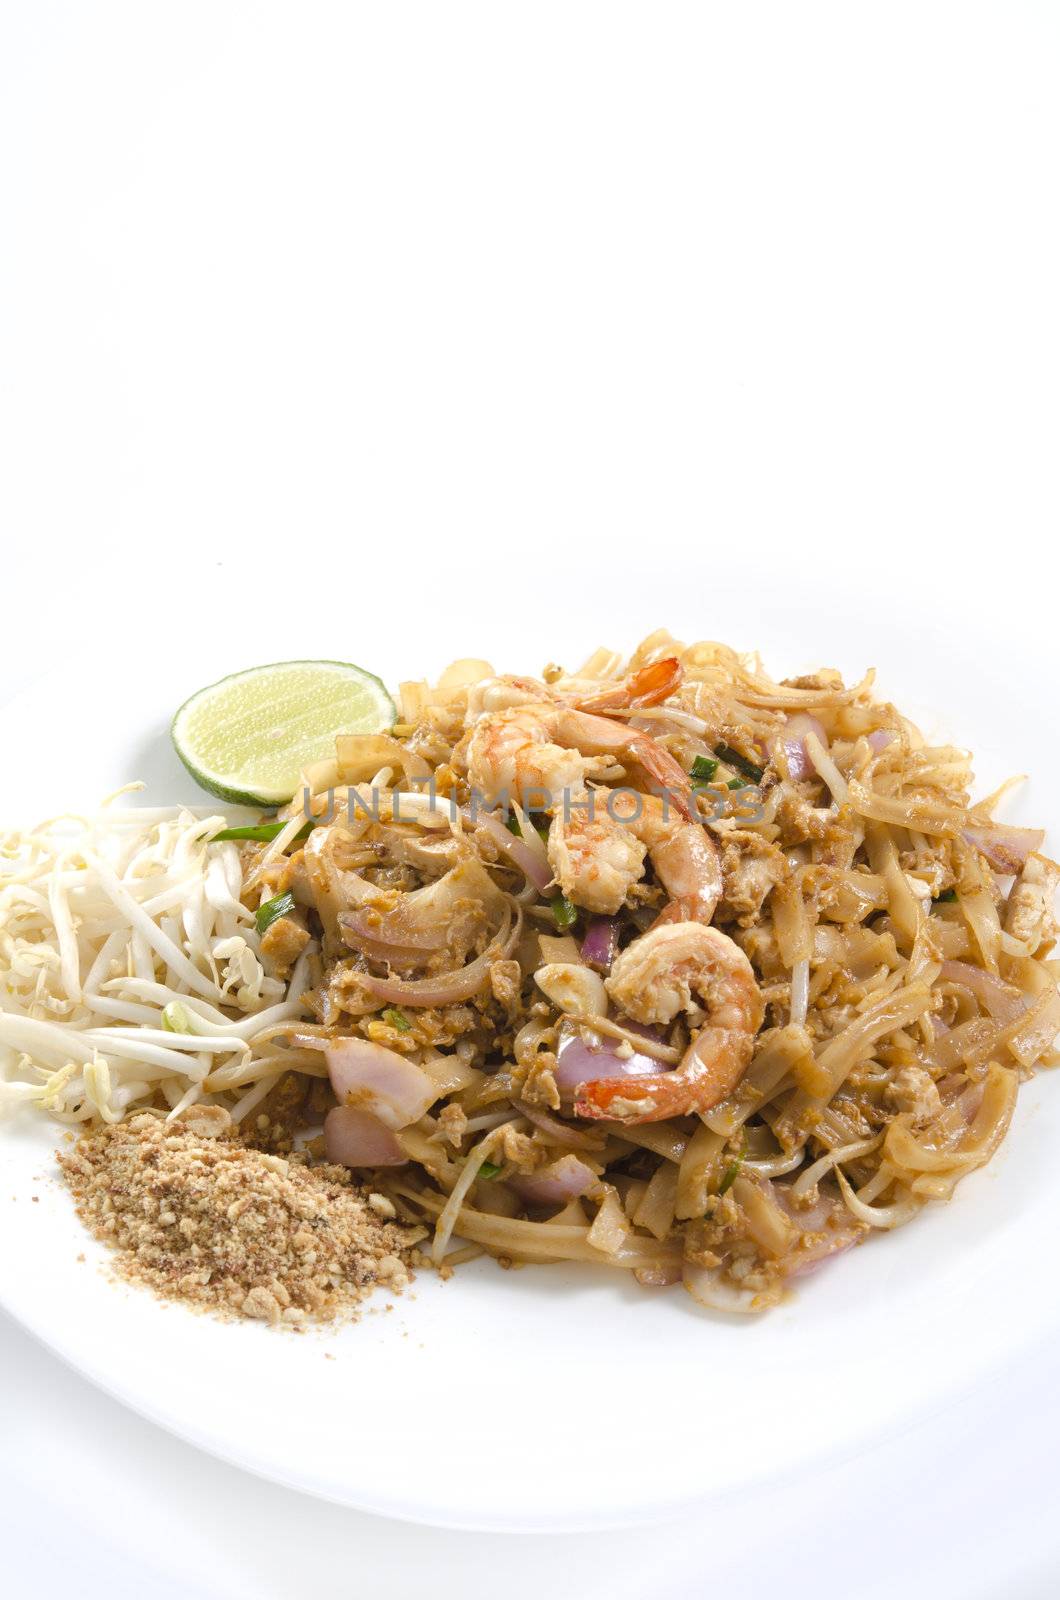 PAd Thai with shrimp by yuliang11